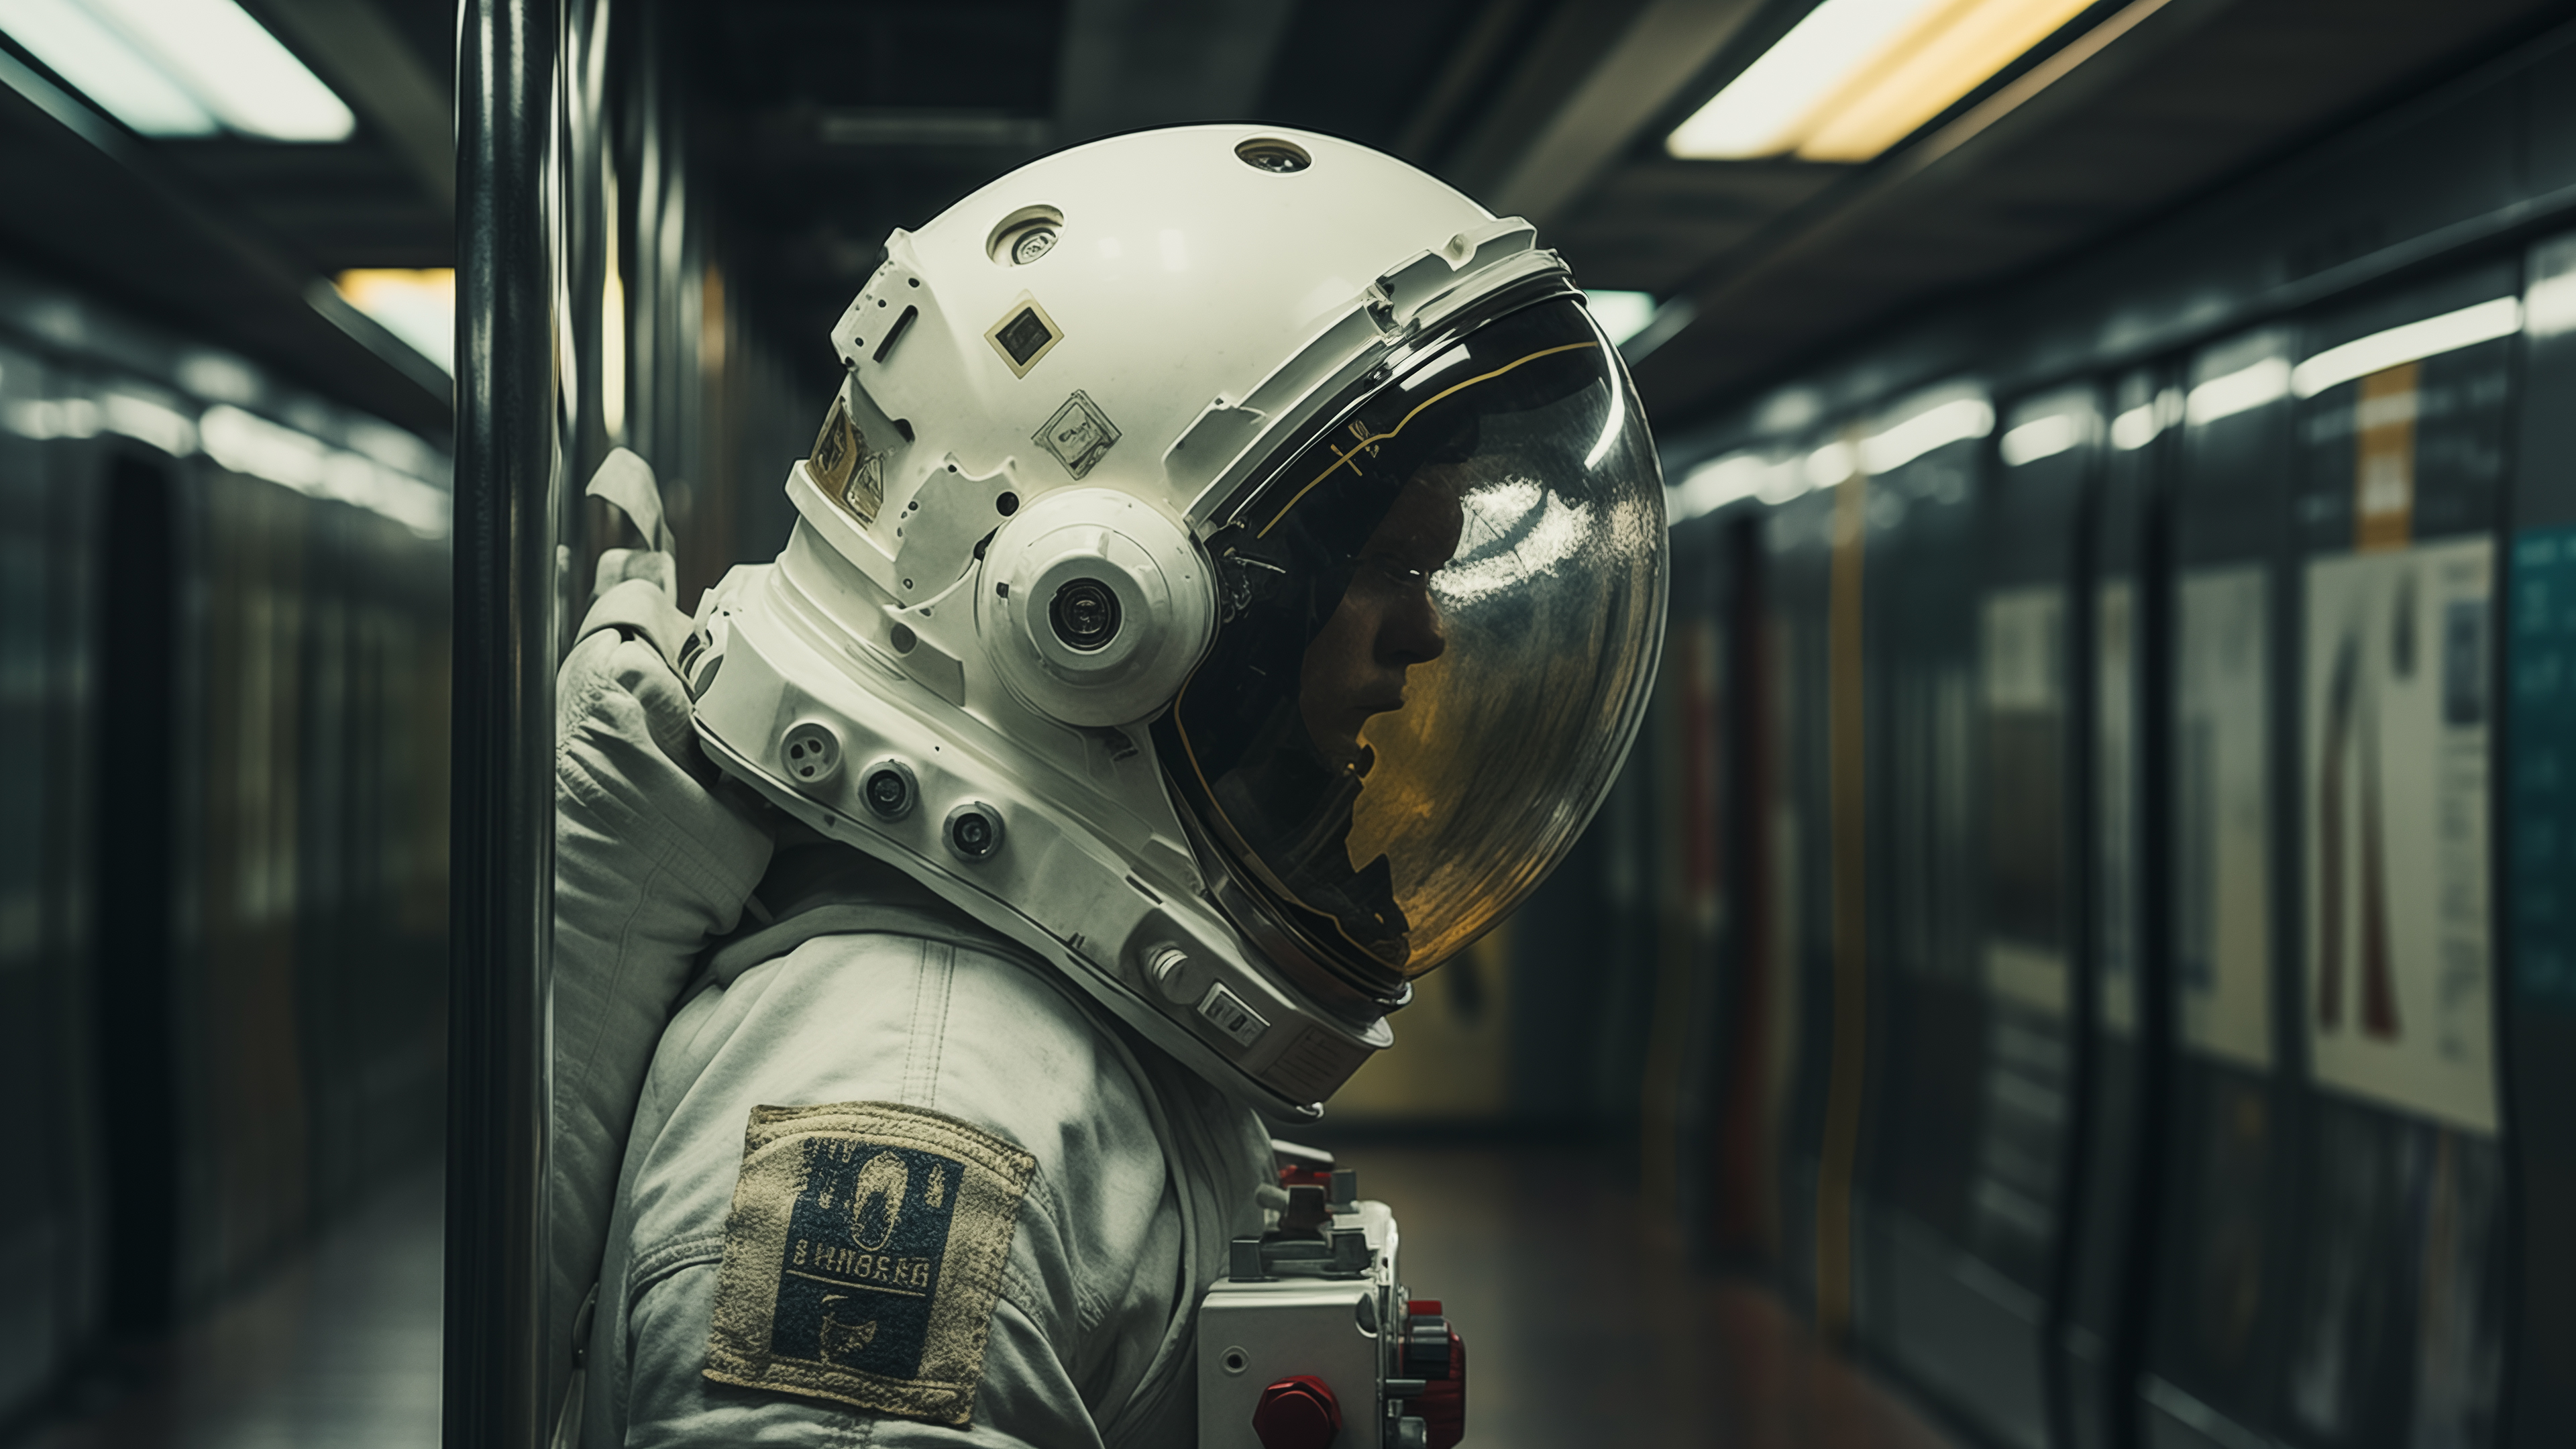 General 3840x2160 AI art astronaut helmet subway blurred blurry background digital art spacesuit